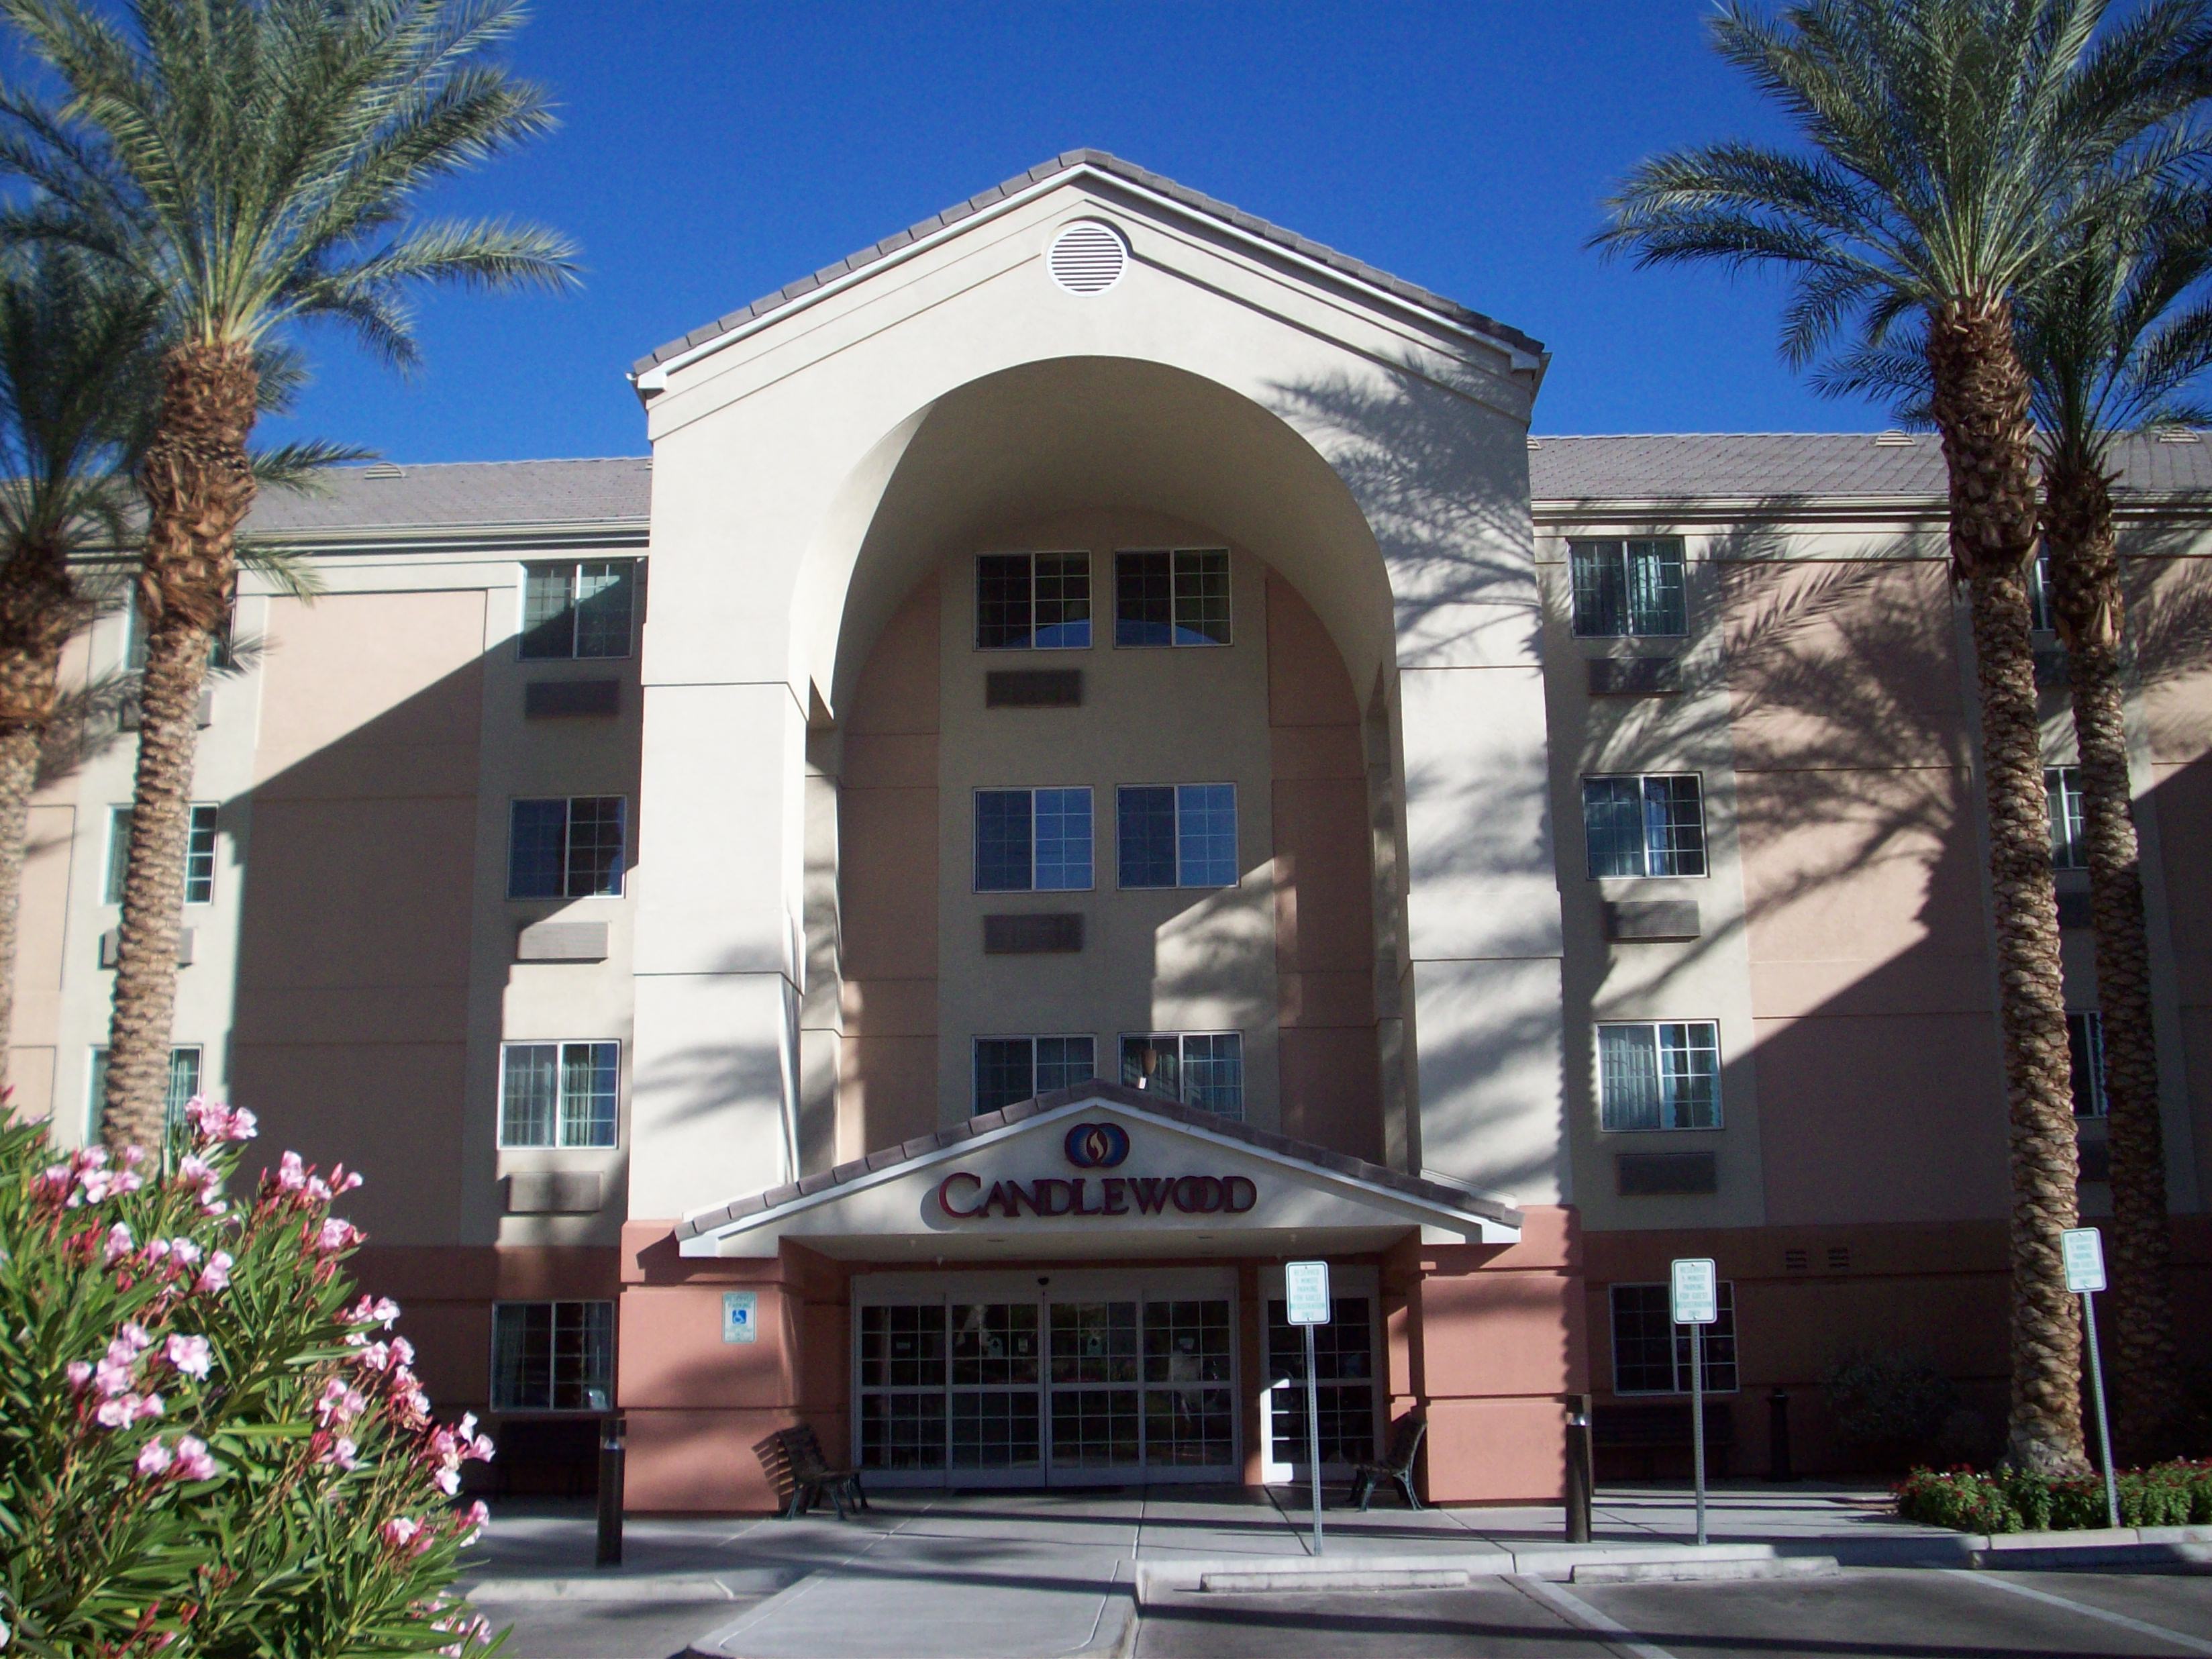 Photo of Candlewood Suites Las Vegas, Las Vegas, NV